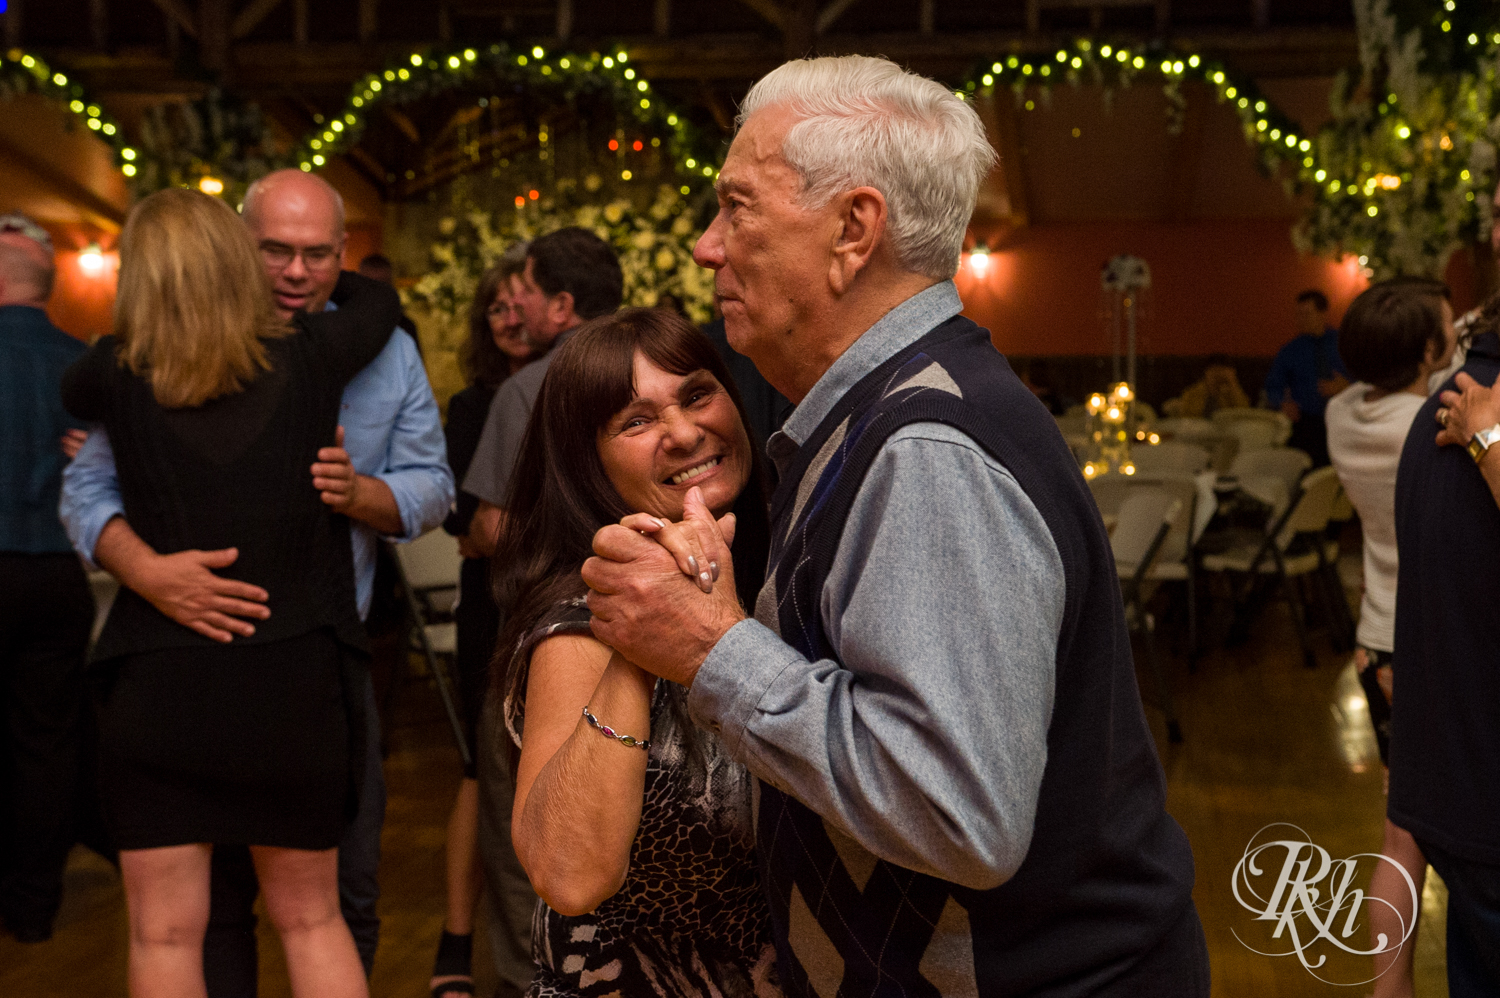 Guests dance during wedding reception at Memories Ballroom in Port Washington, Wisconsin. 